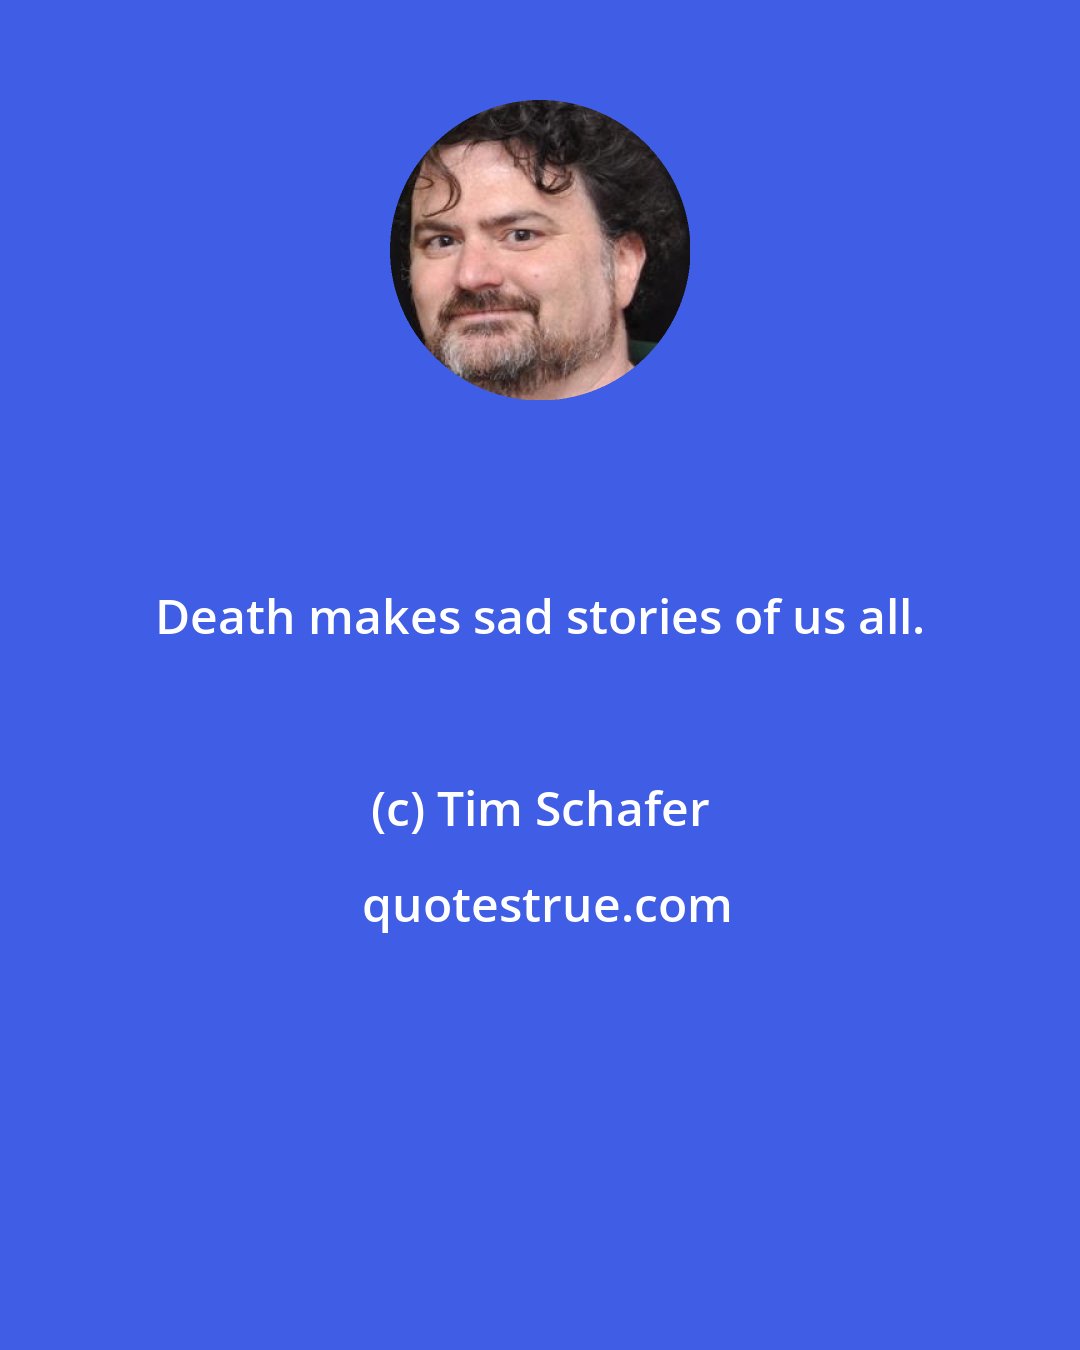 Tim Schafer: Death makes sad stories of us all.